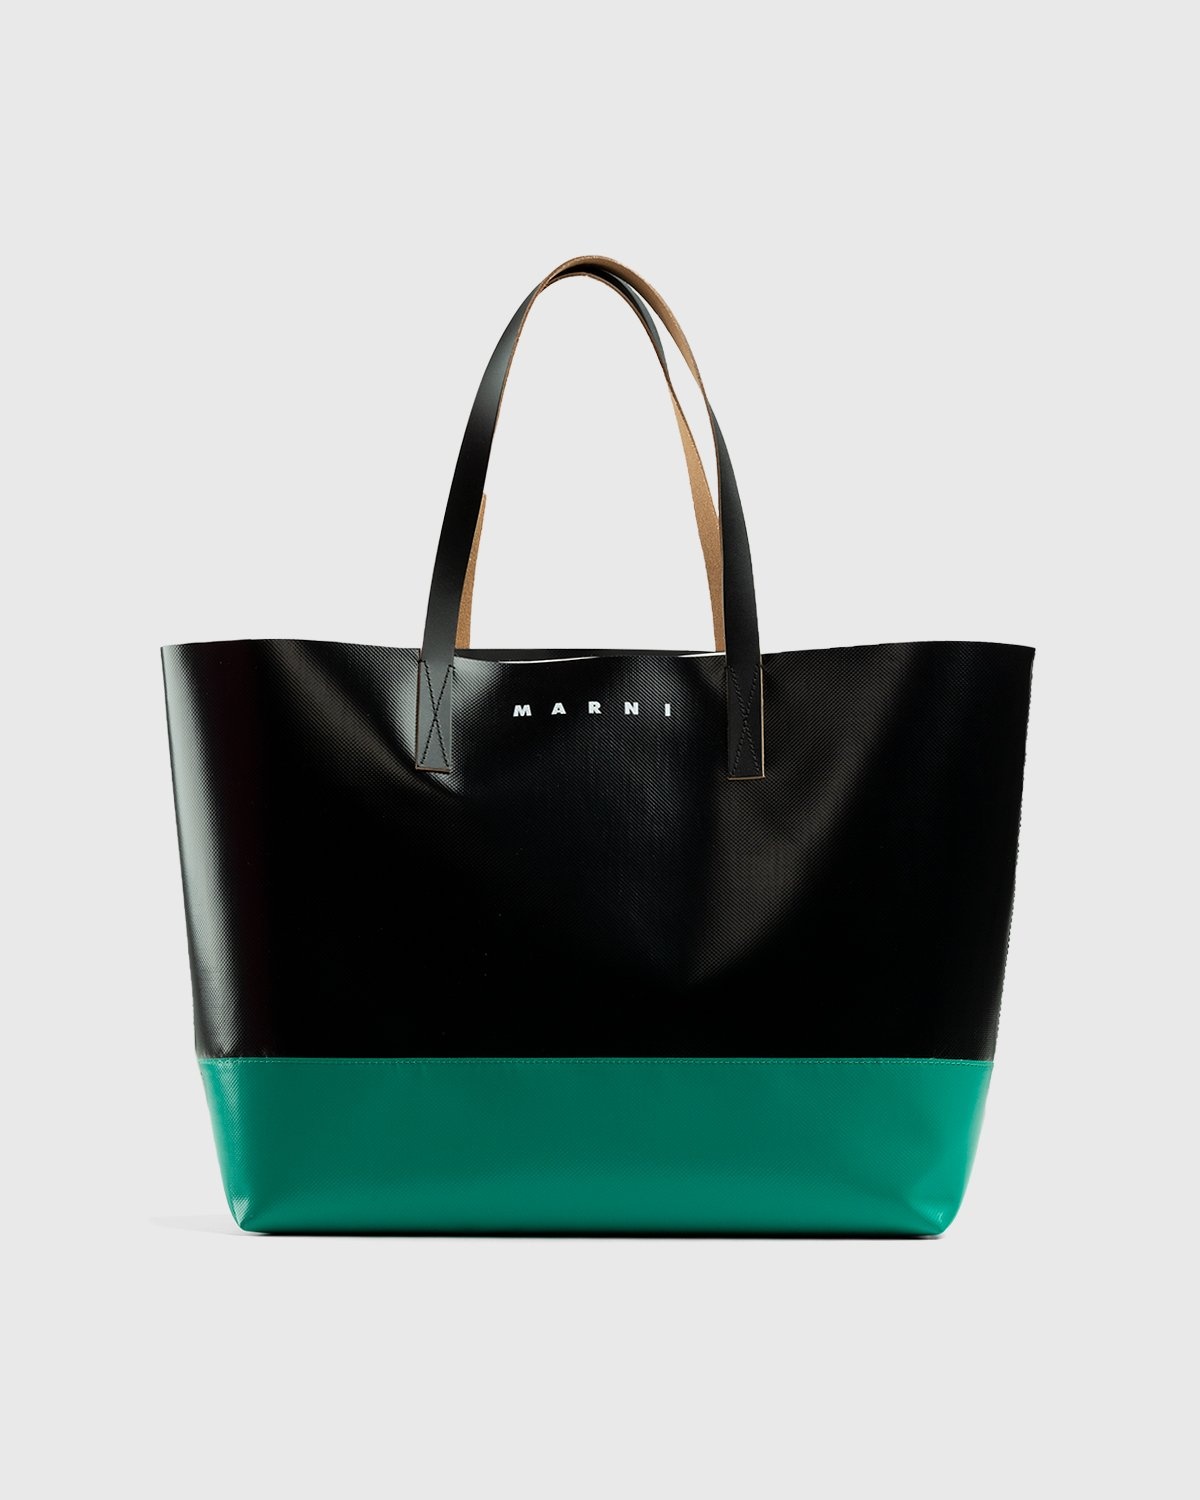 Marni – Tribeca Two-Tone Tote Bag Black/Green - Tote Bags - Black - Image 1